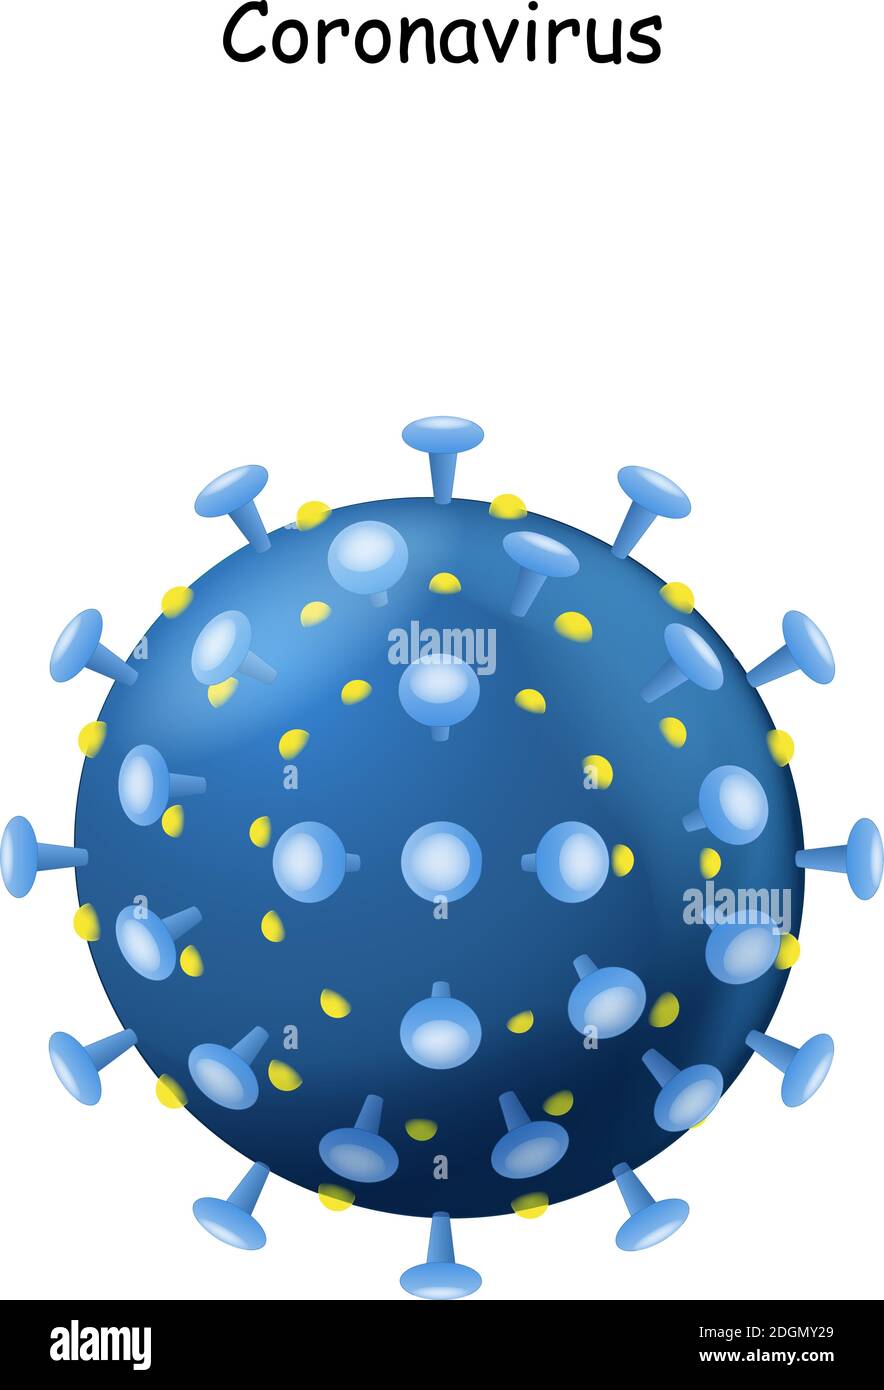 Corona Virus. virion of Coronavirus on white background. 2019-nCoV. the virus that caused epidemic of pneumonia in China. Vector illustration Stock Vector